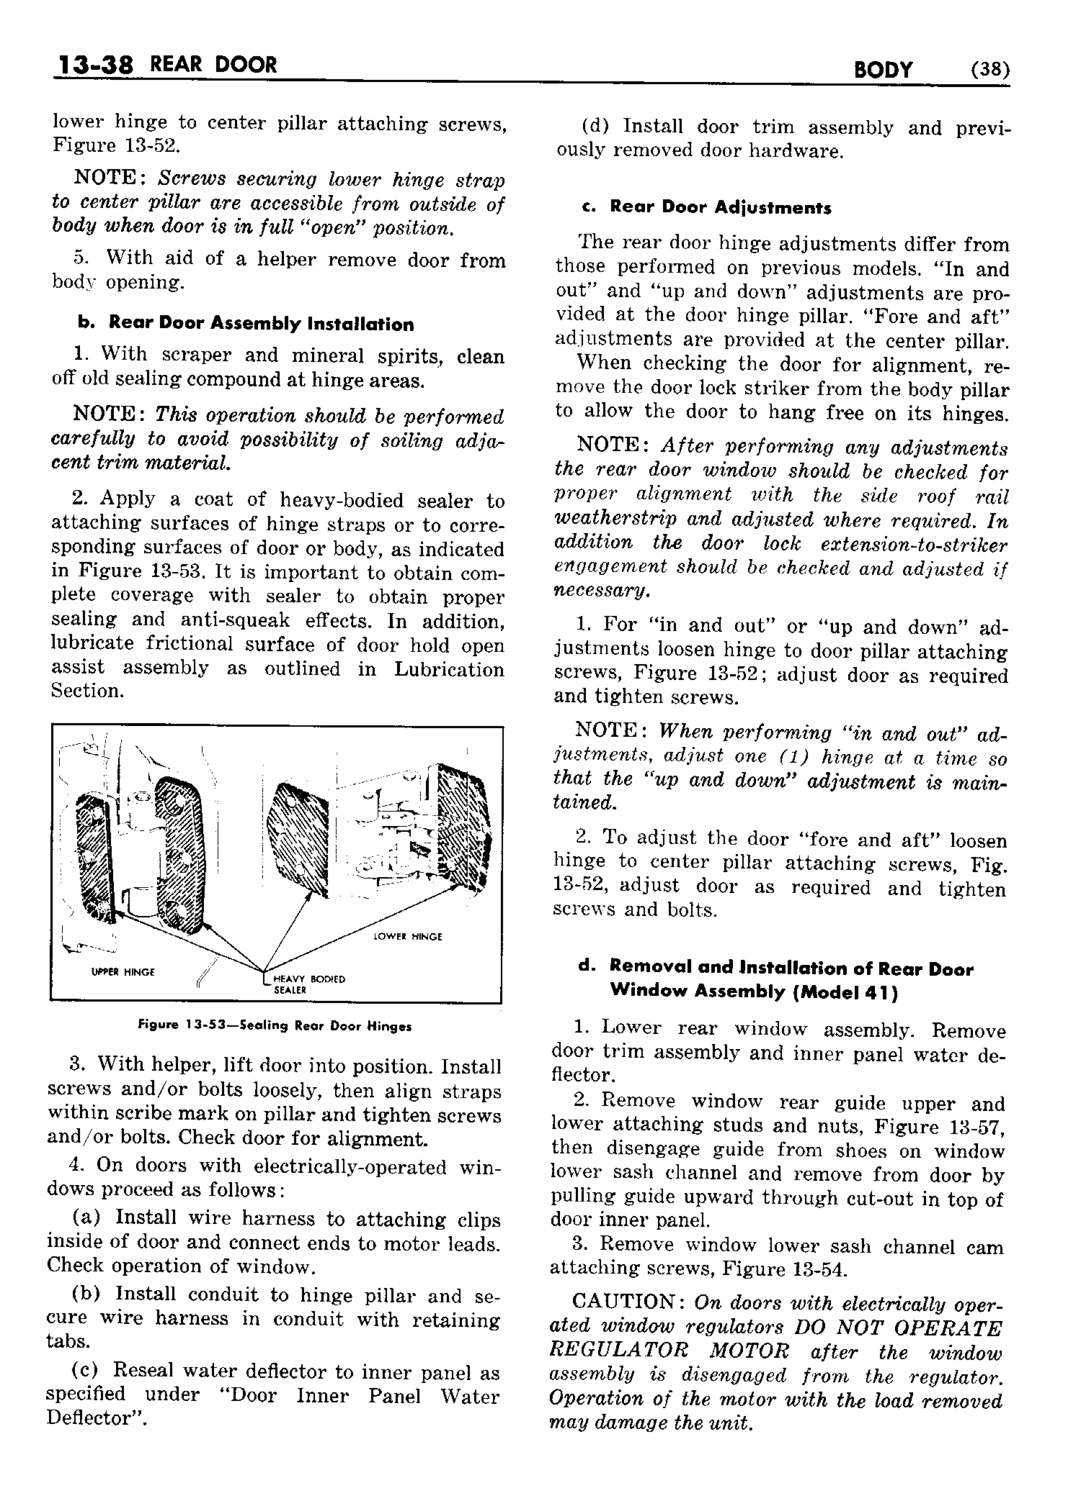 n_1958 Buick Body Service Manual-039-039.jpg